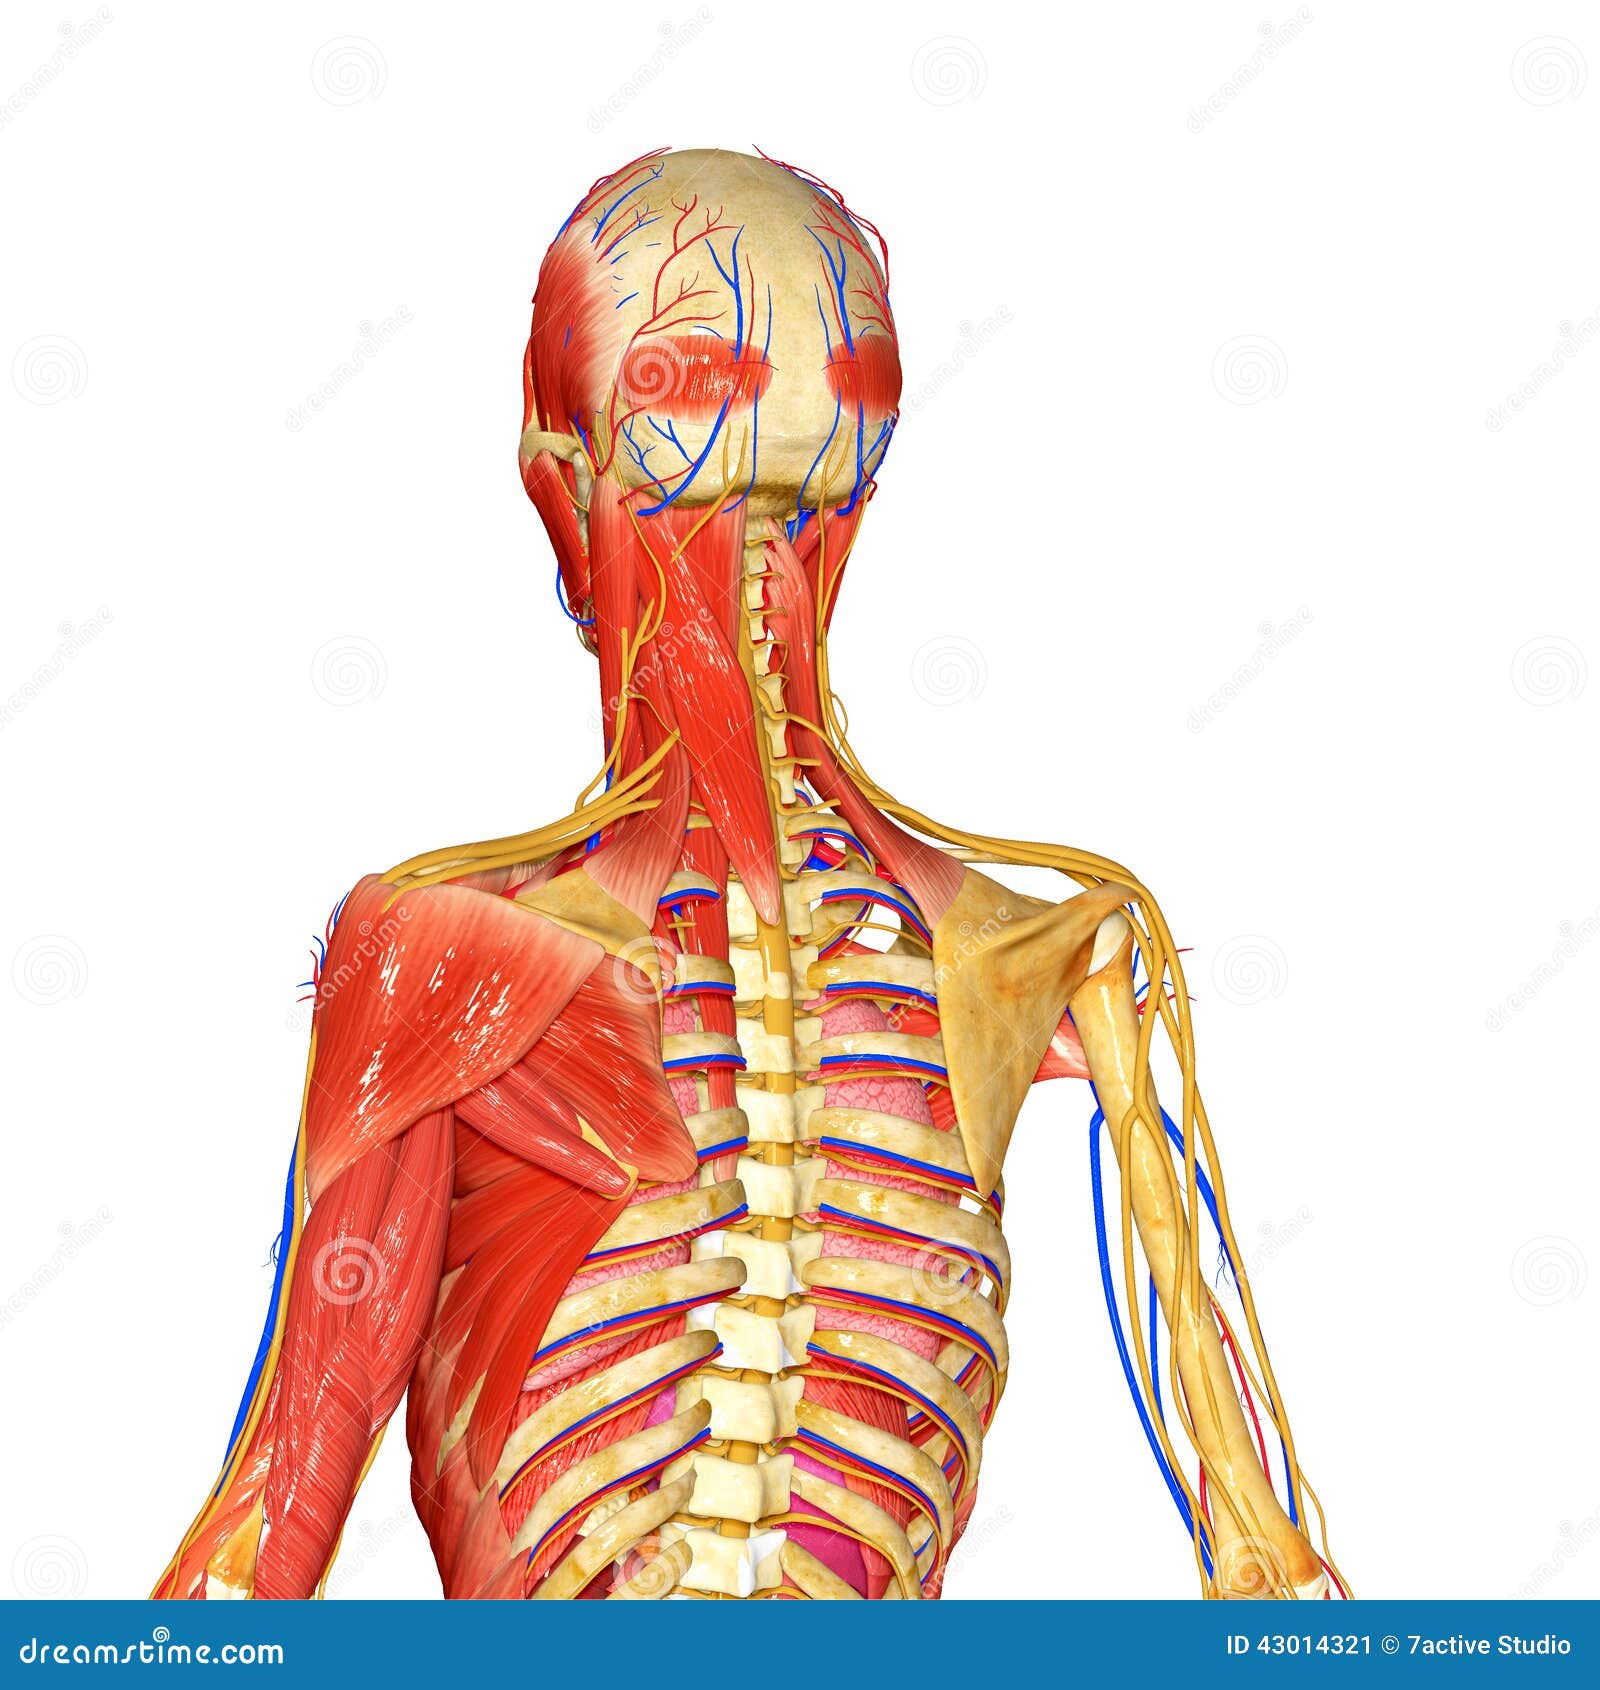 Muscles and skeleton stock illustration. Illustration of medicine